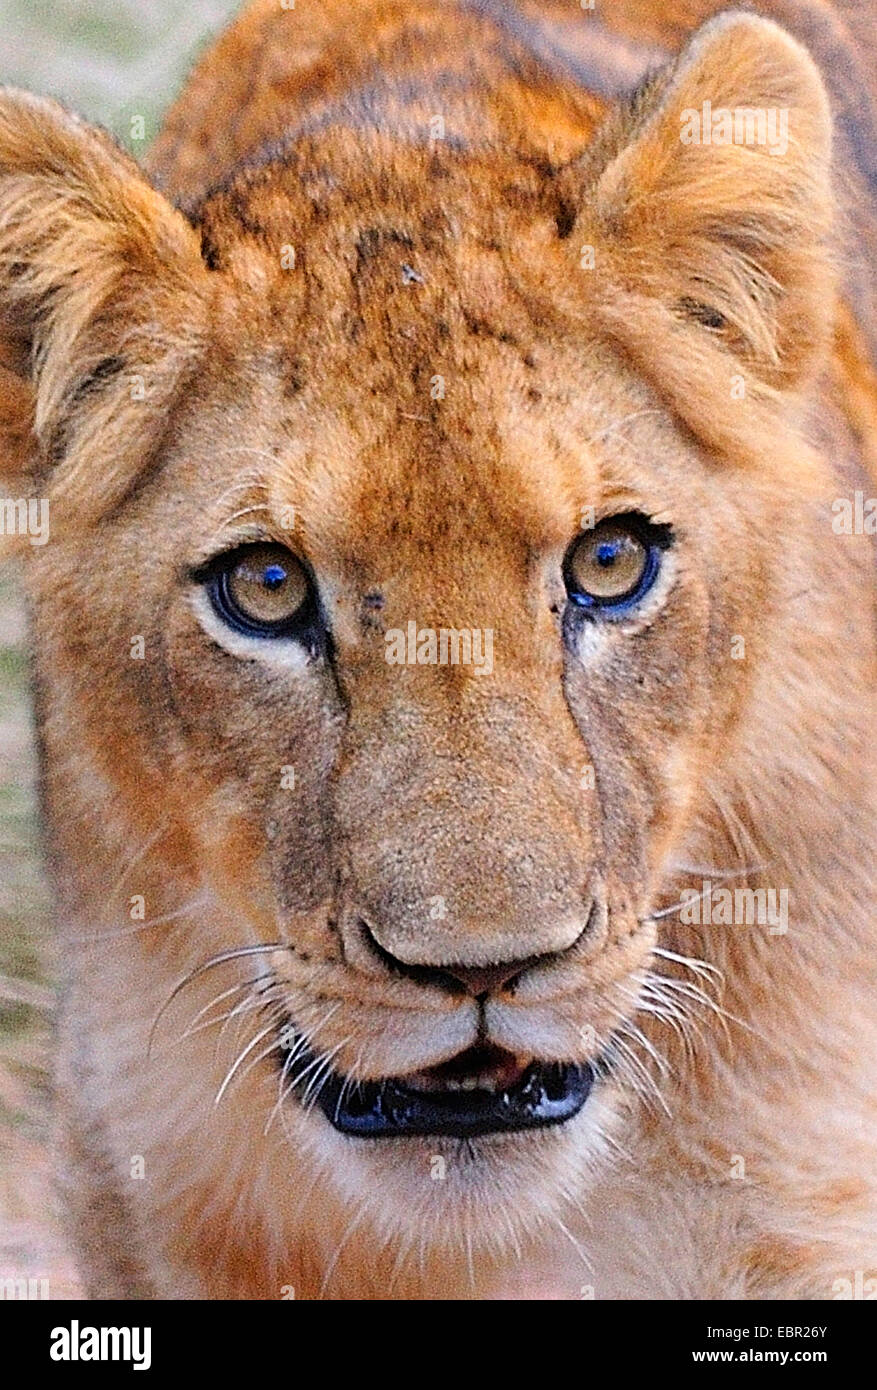 Lion (Panthera leo), capretti lion, ritratto, Sud Africa, Krueger Nationalpark Foto Stock